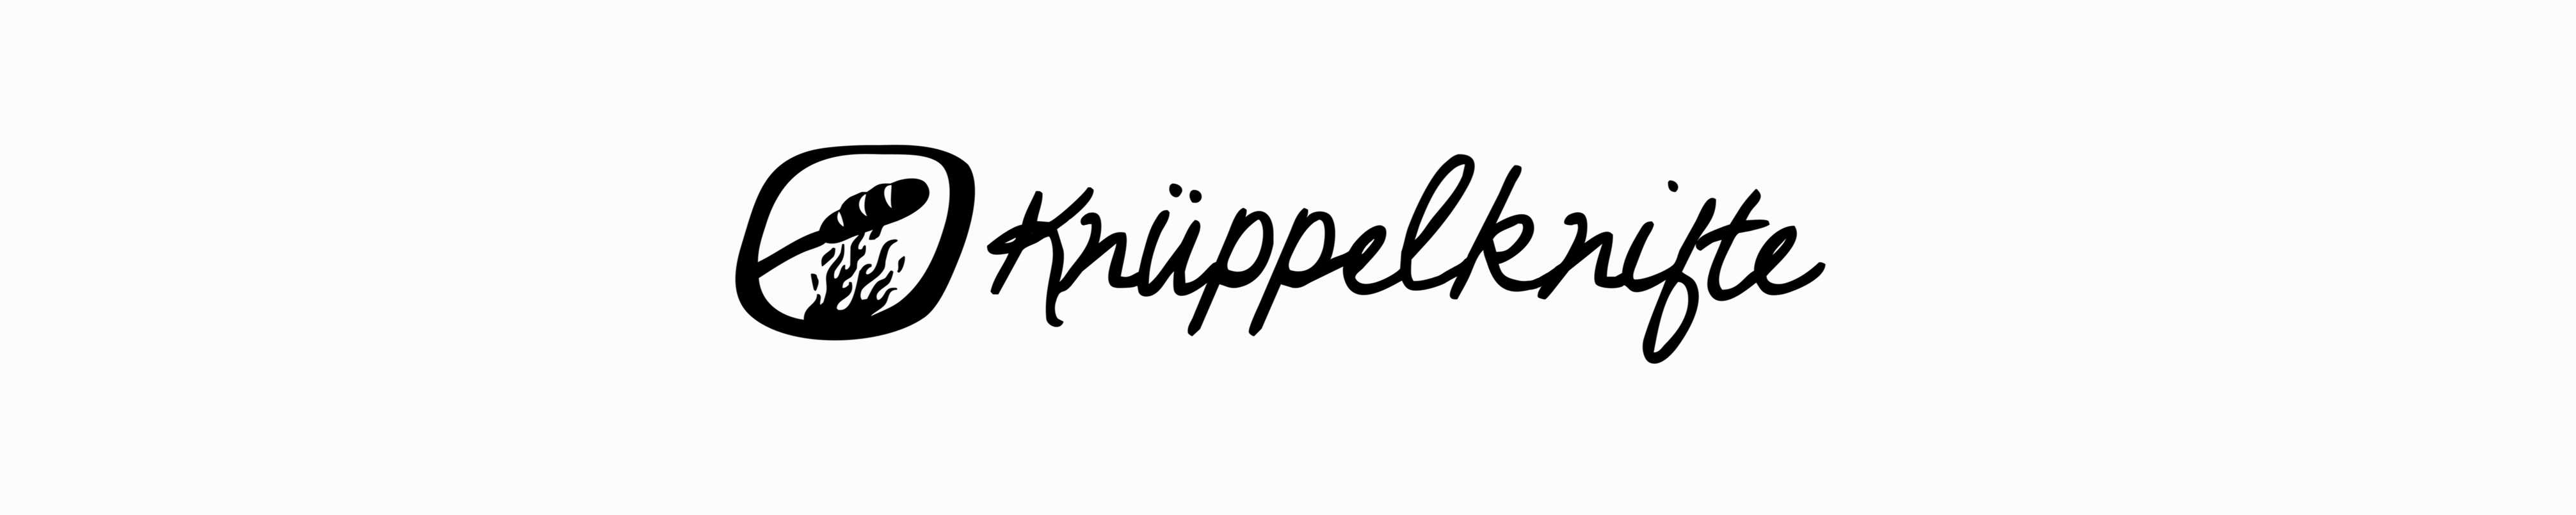 knüppelknifte logo